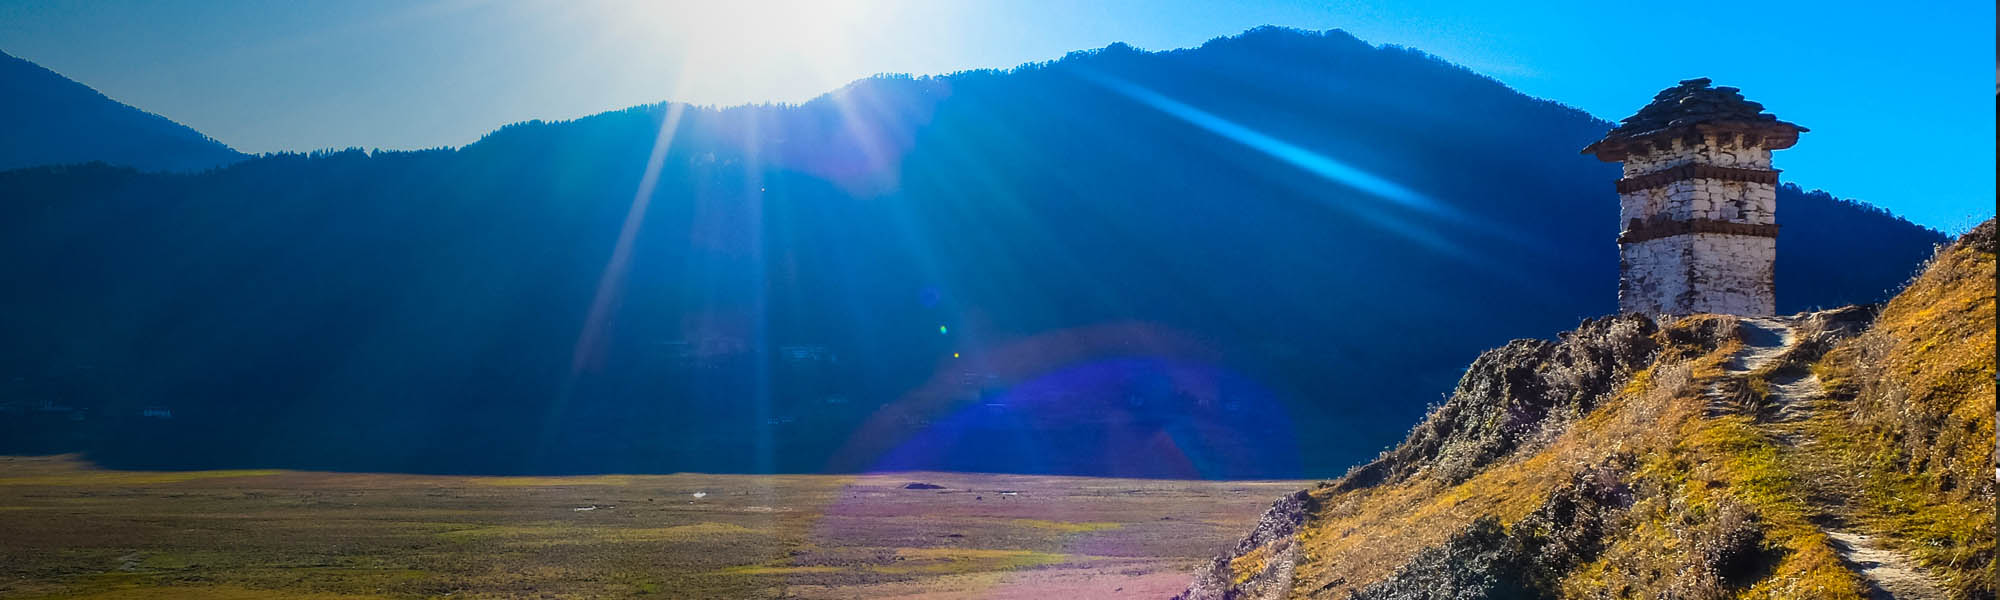 Bhutan Phobjikha Valley